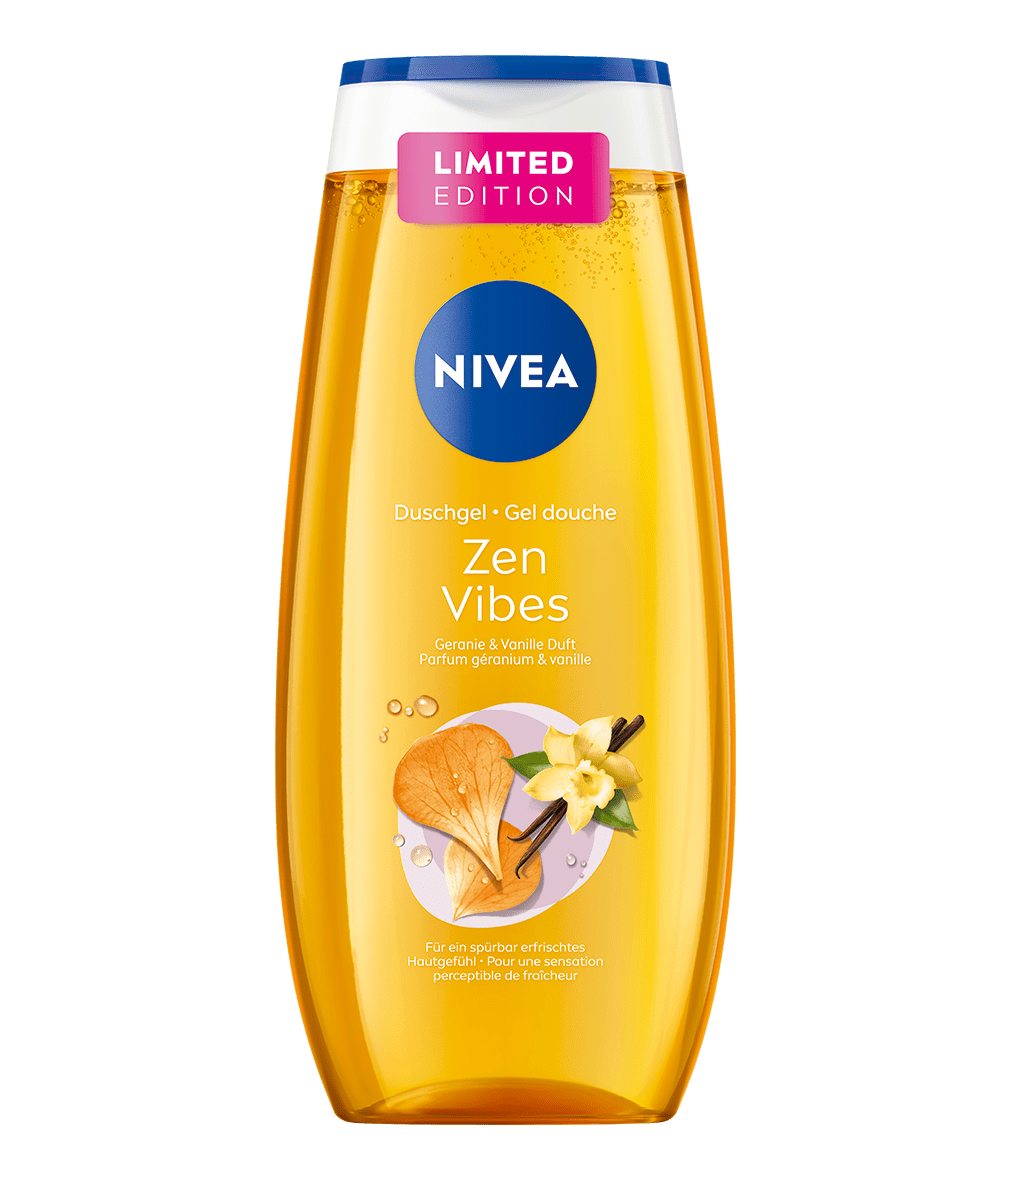 NIVEA Zen Vibes Duschgel Limited Edition_250ml